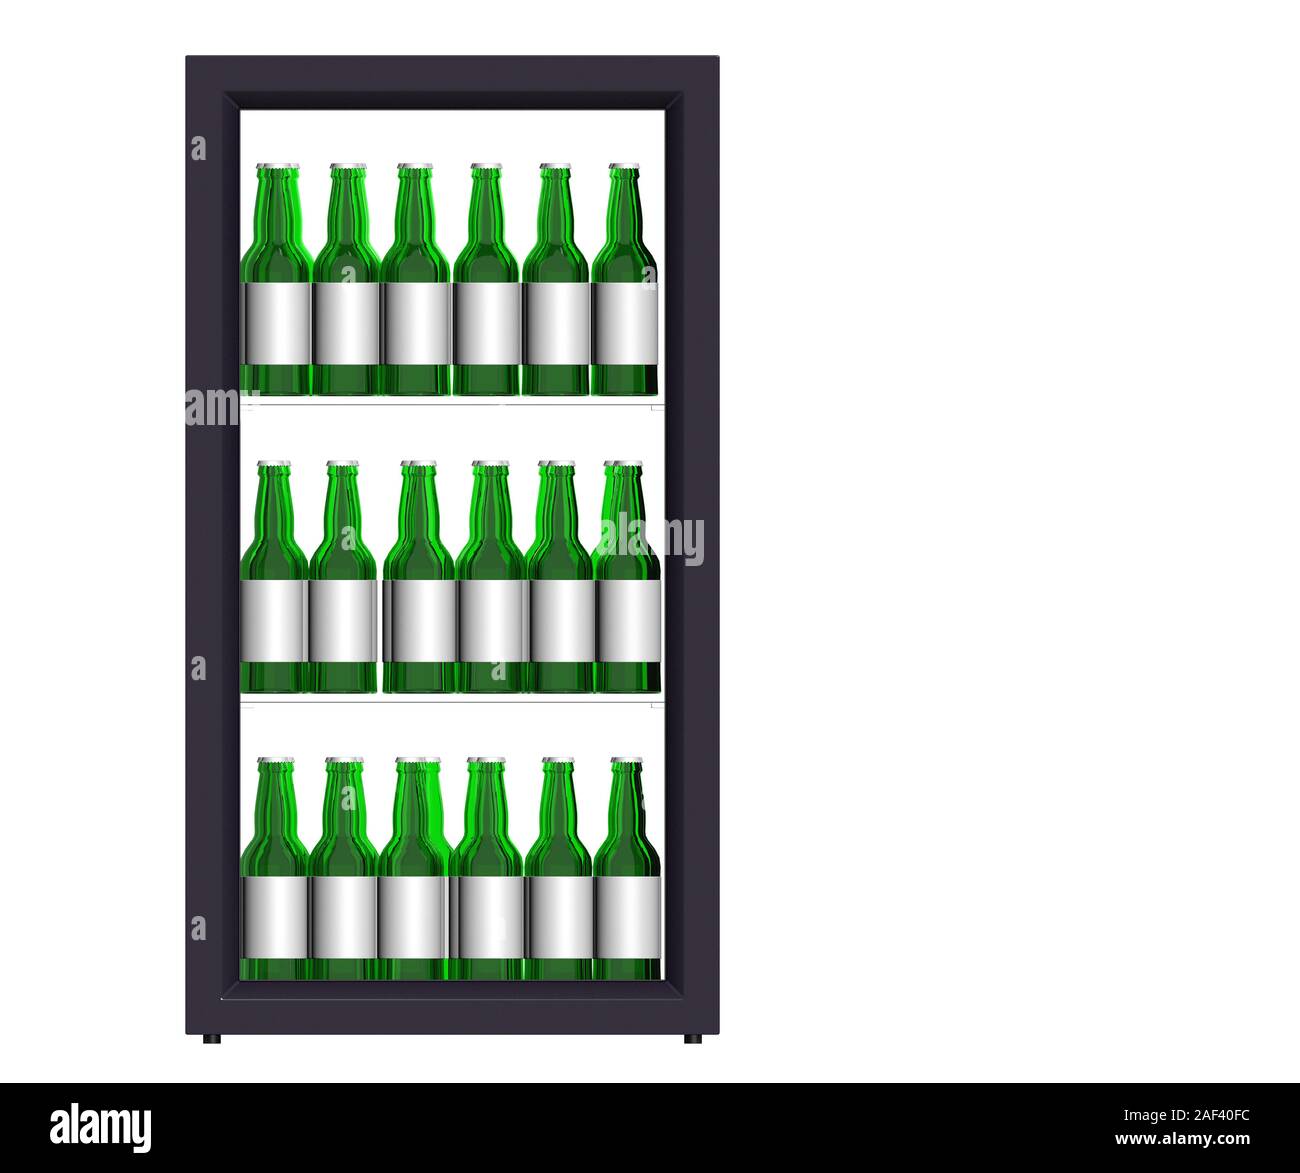 3d render of drink storage refrigerator display Stock Photo